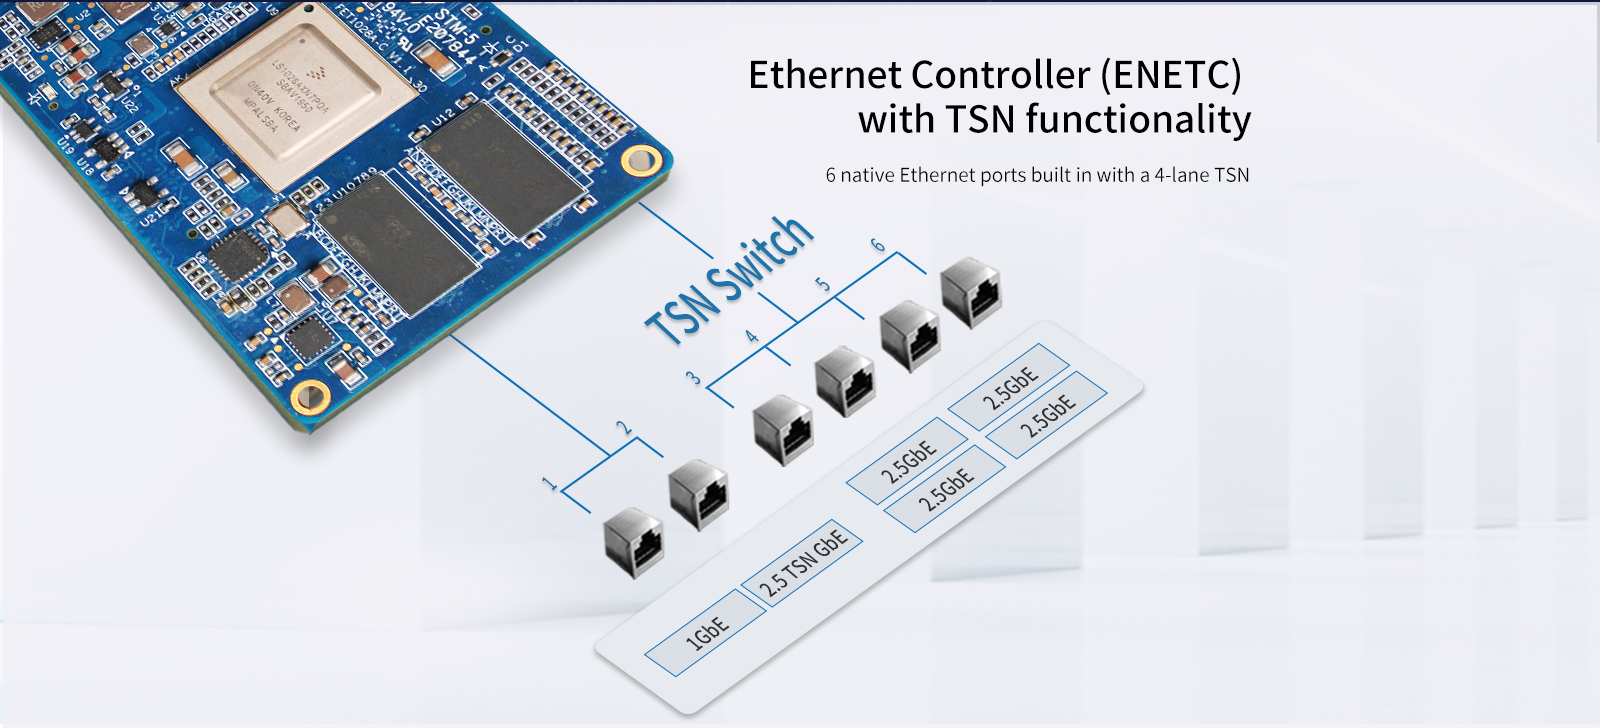 LS1028A Ethernet can support TSN